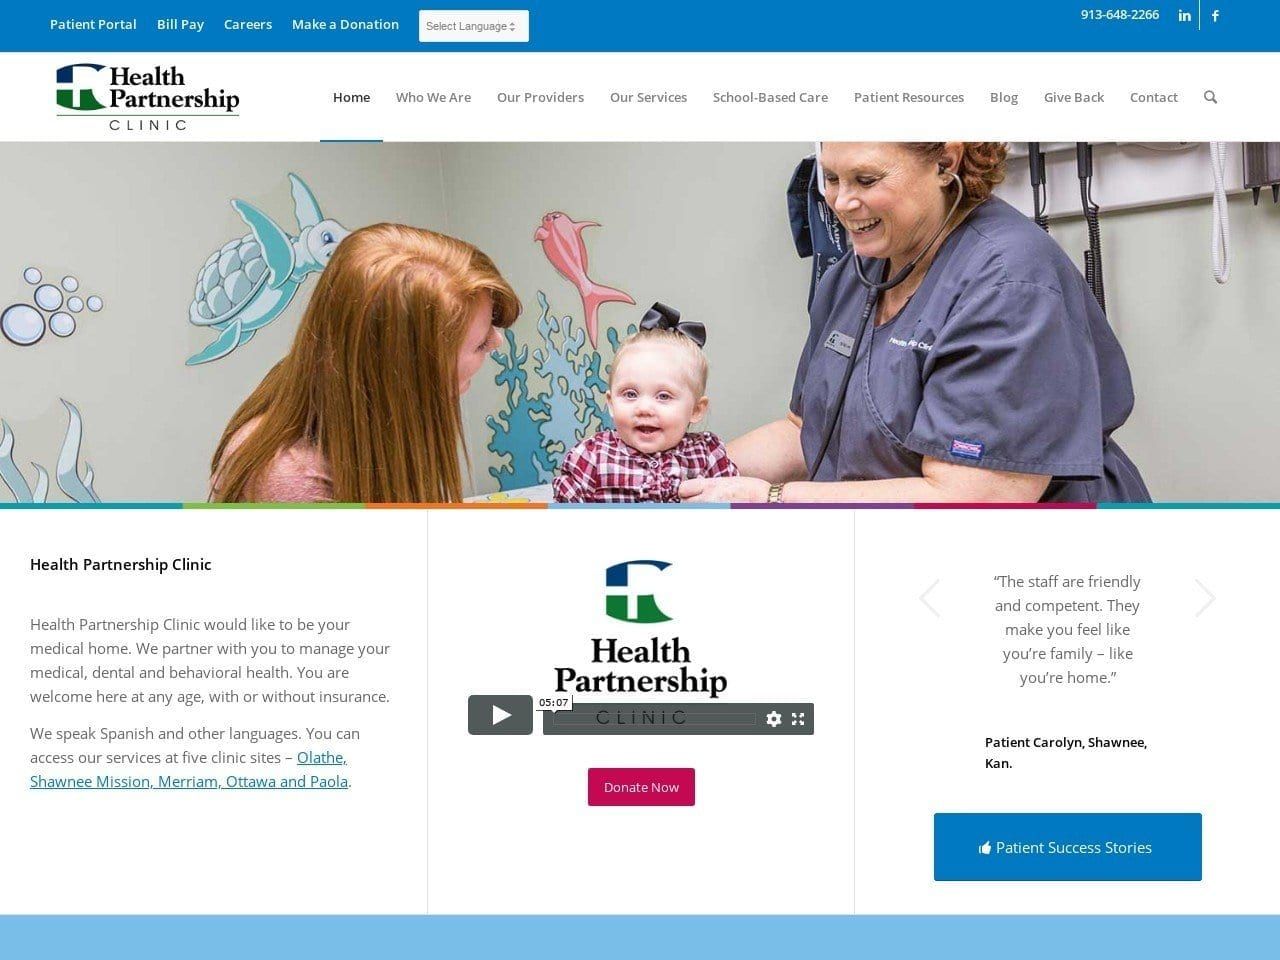 Health Partnership Clinic Website Screenshot from hpcjc.com